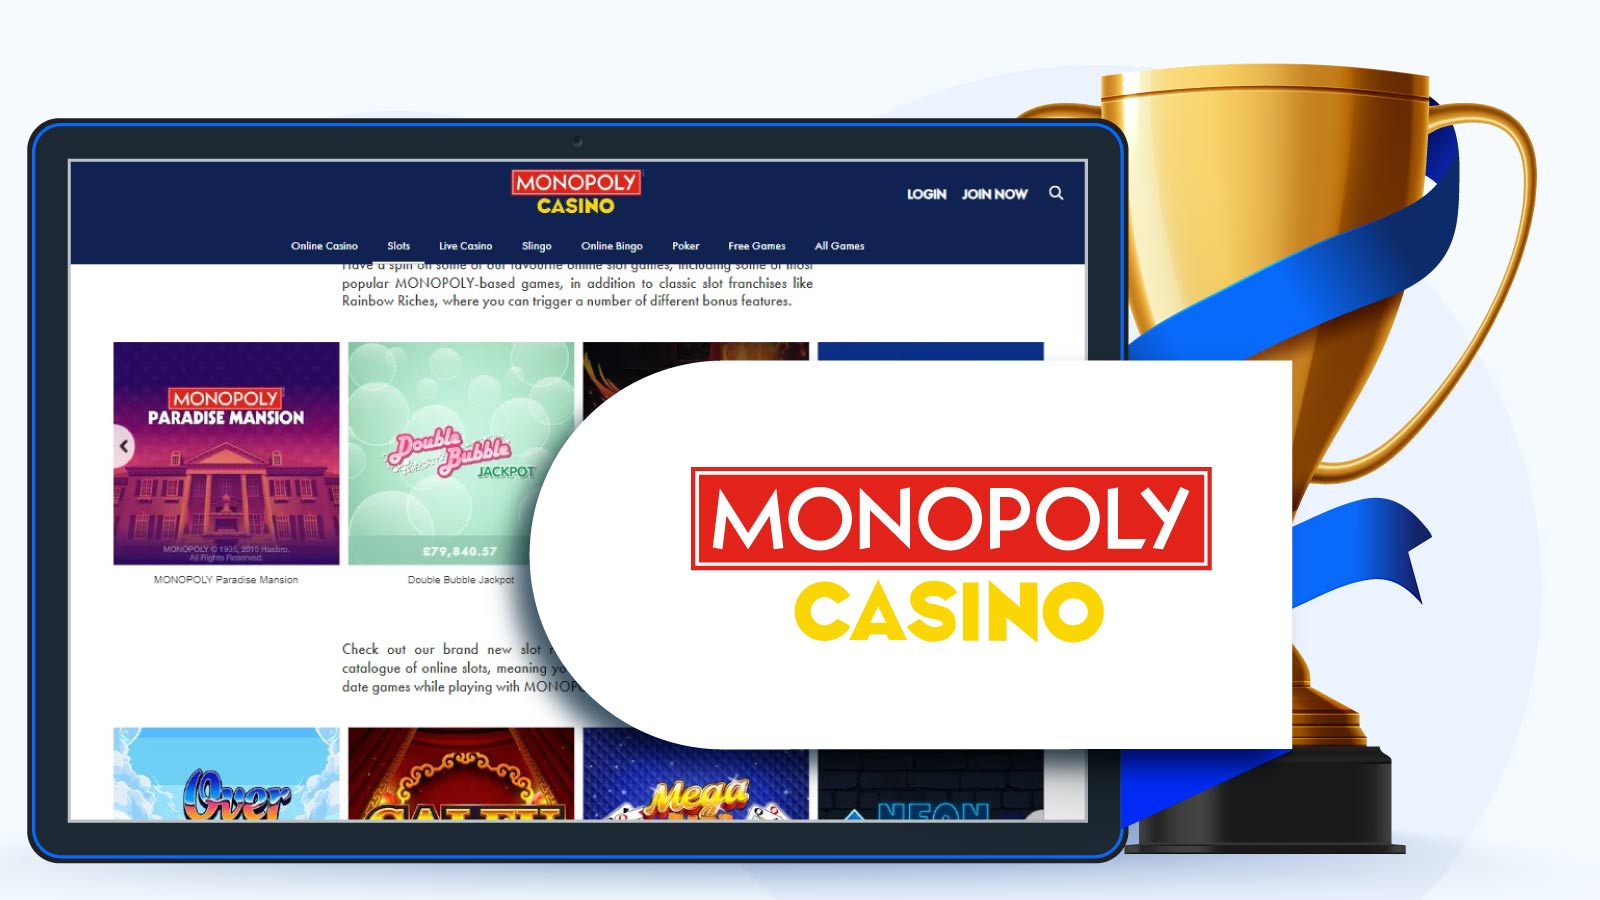 Monopoly Casino Deposit and Play first deposit bonuses